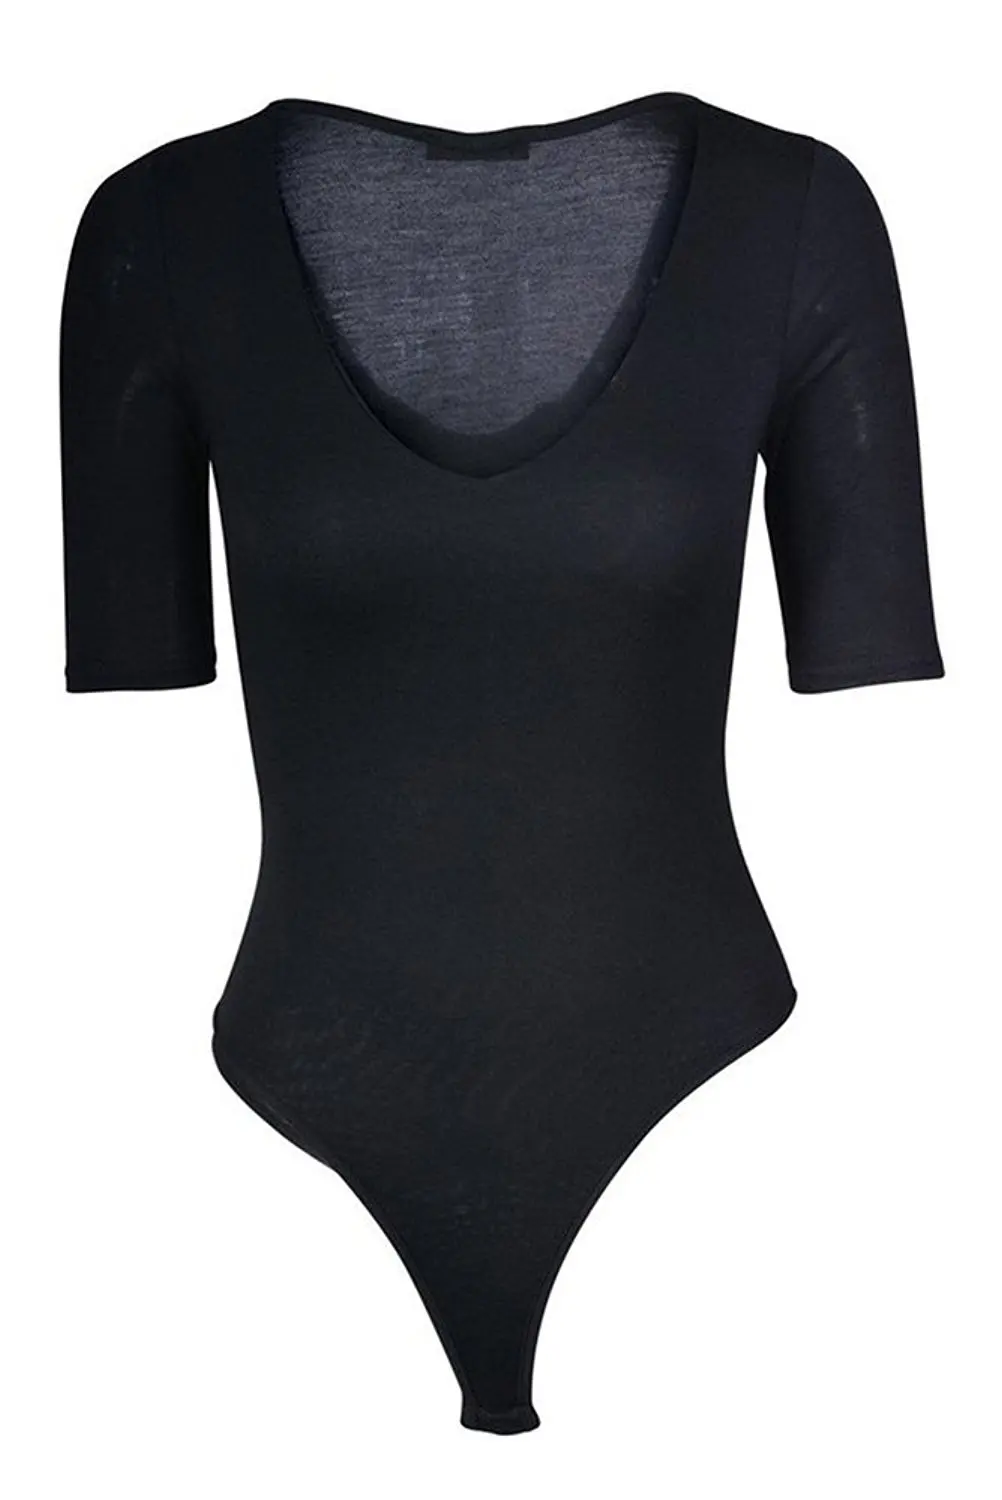 Cheap Crotch Snap Bodysuit, find Crotch Snap Bodysuit deals on line at ...